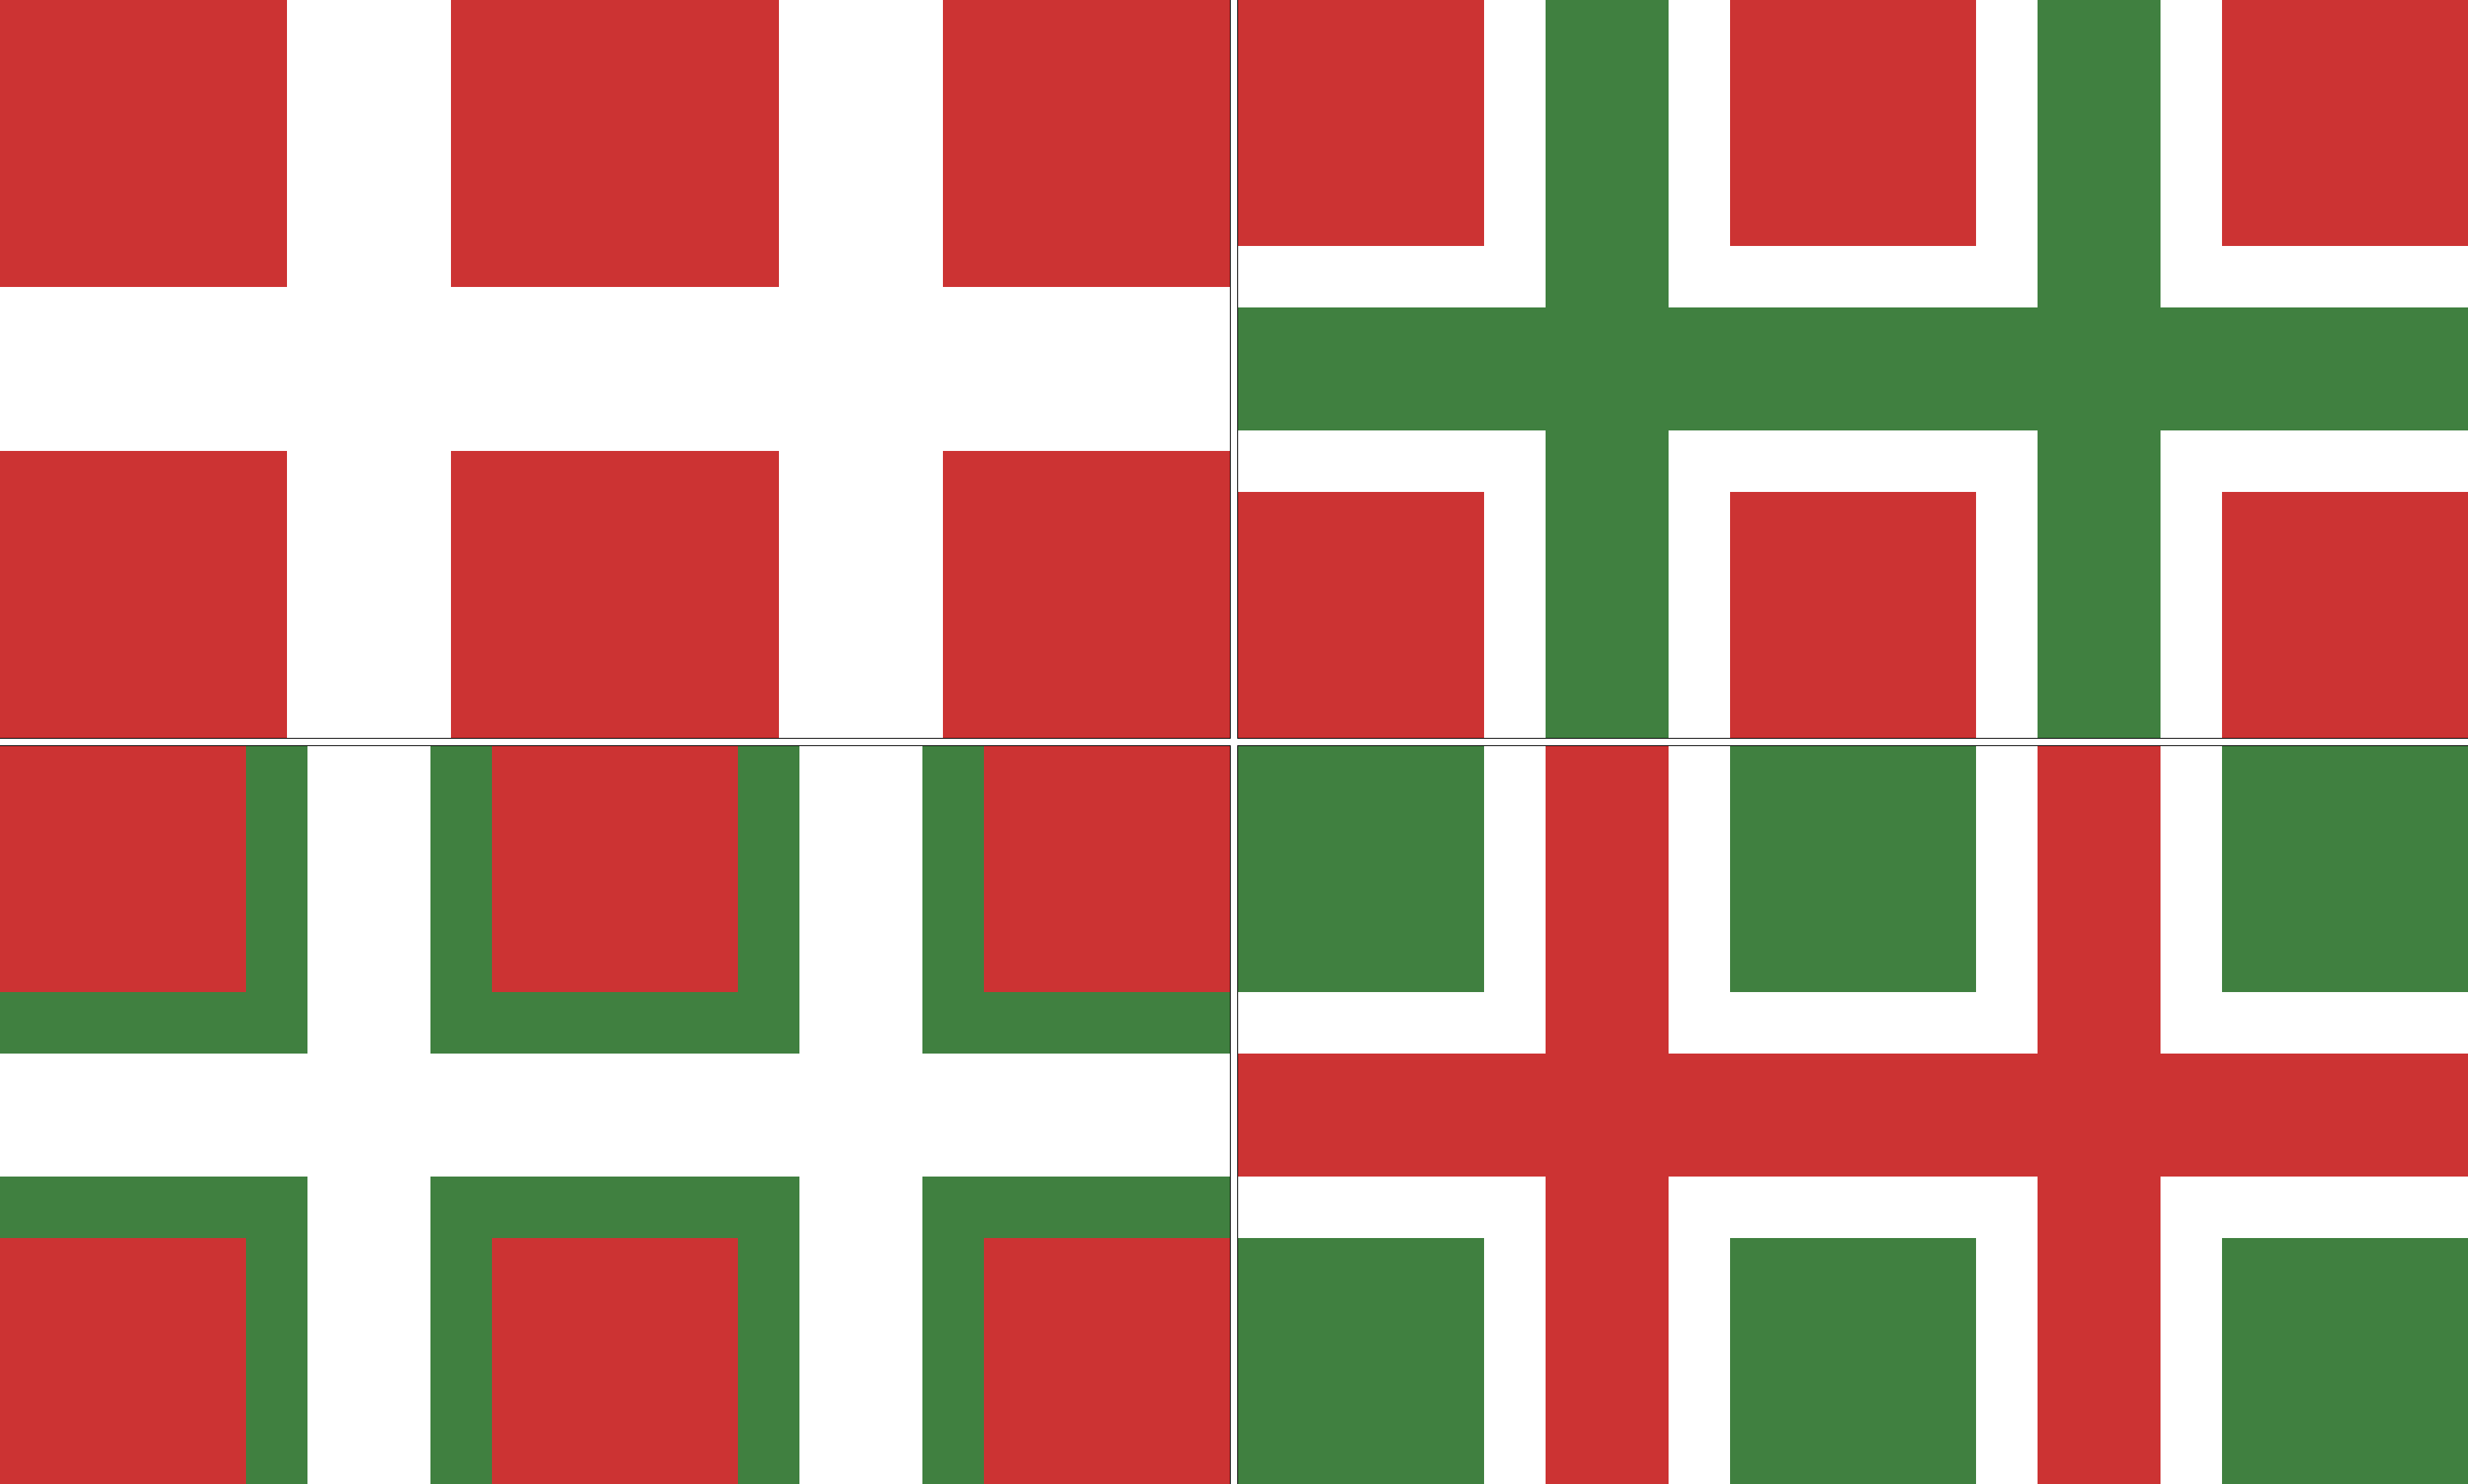 nordic_hungary_flag_by_spiritswriter123-dbqdj2k.png